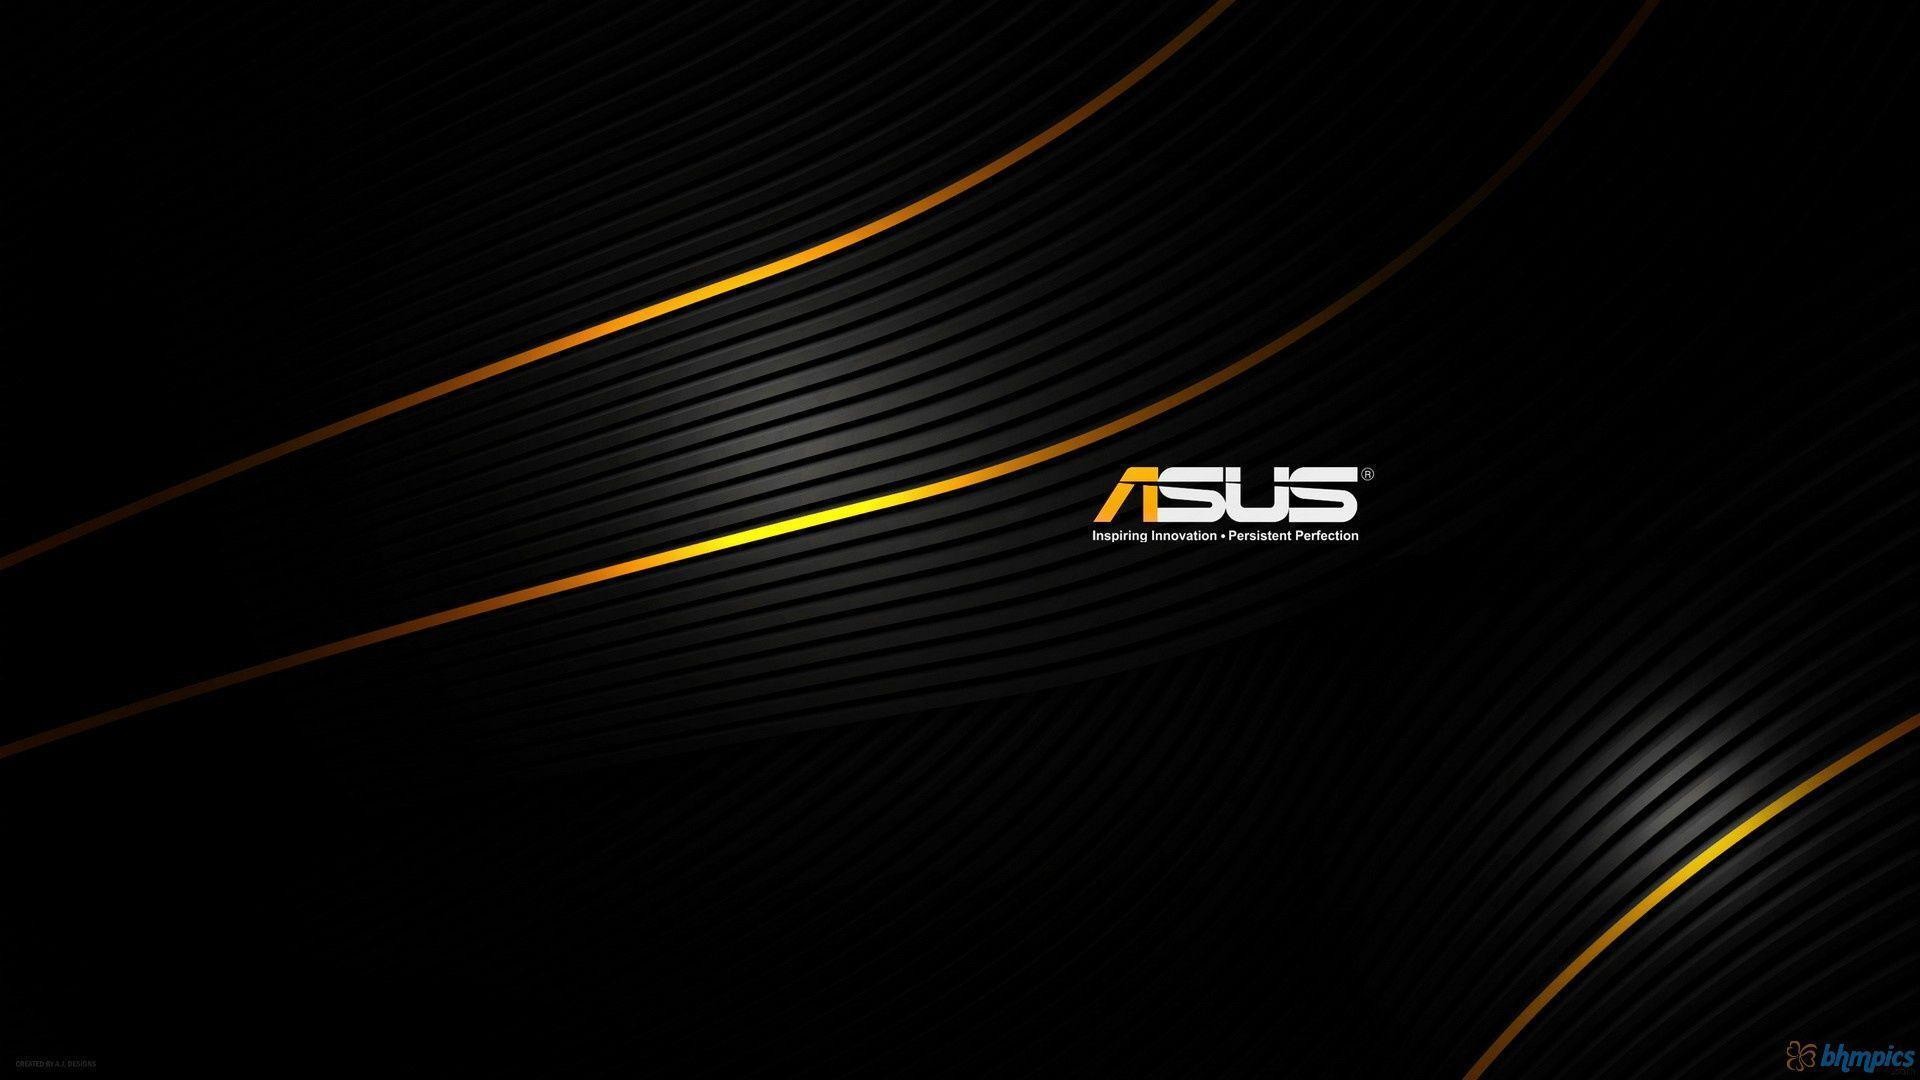 Asus Desktop Background (75+ pictures)